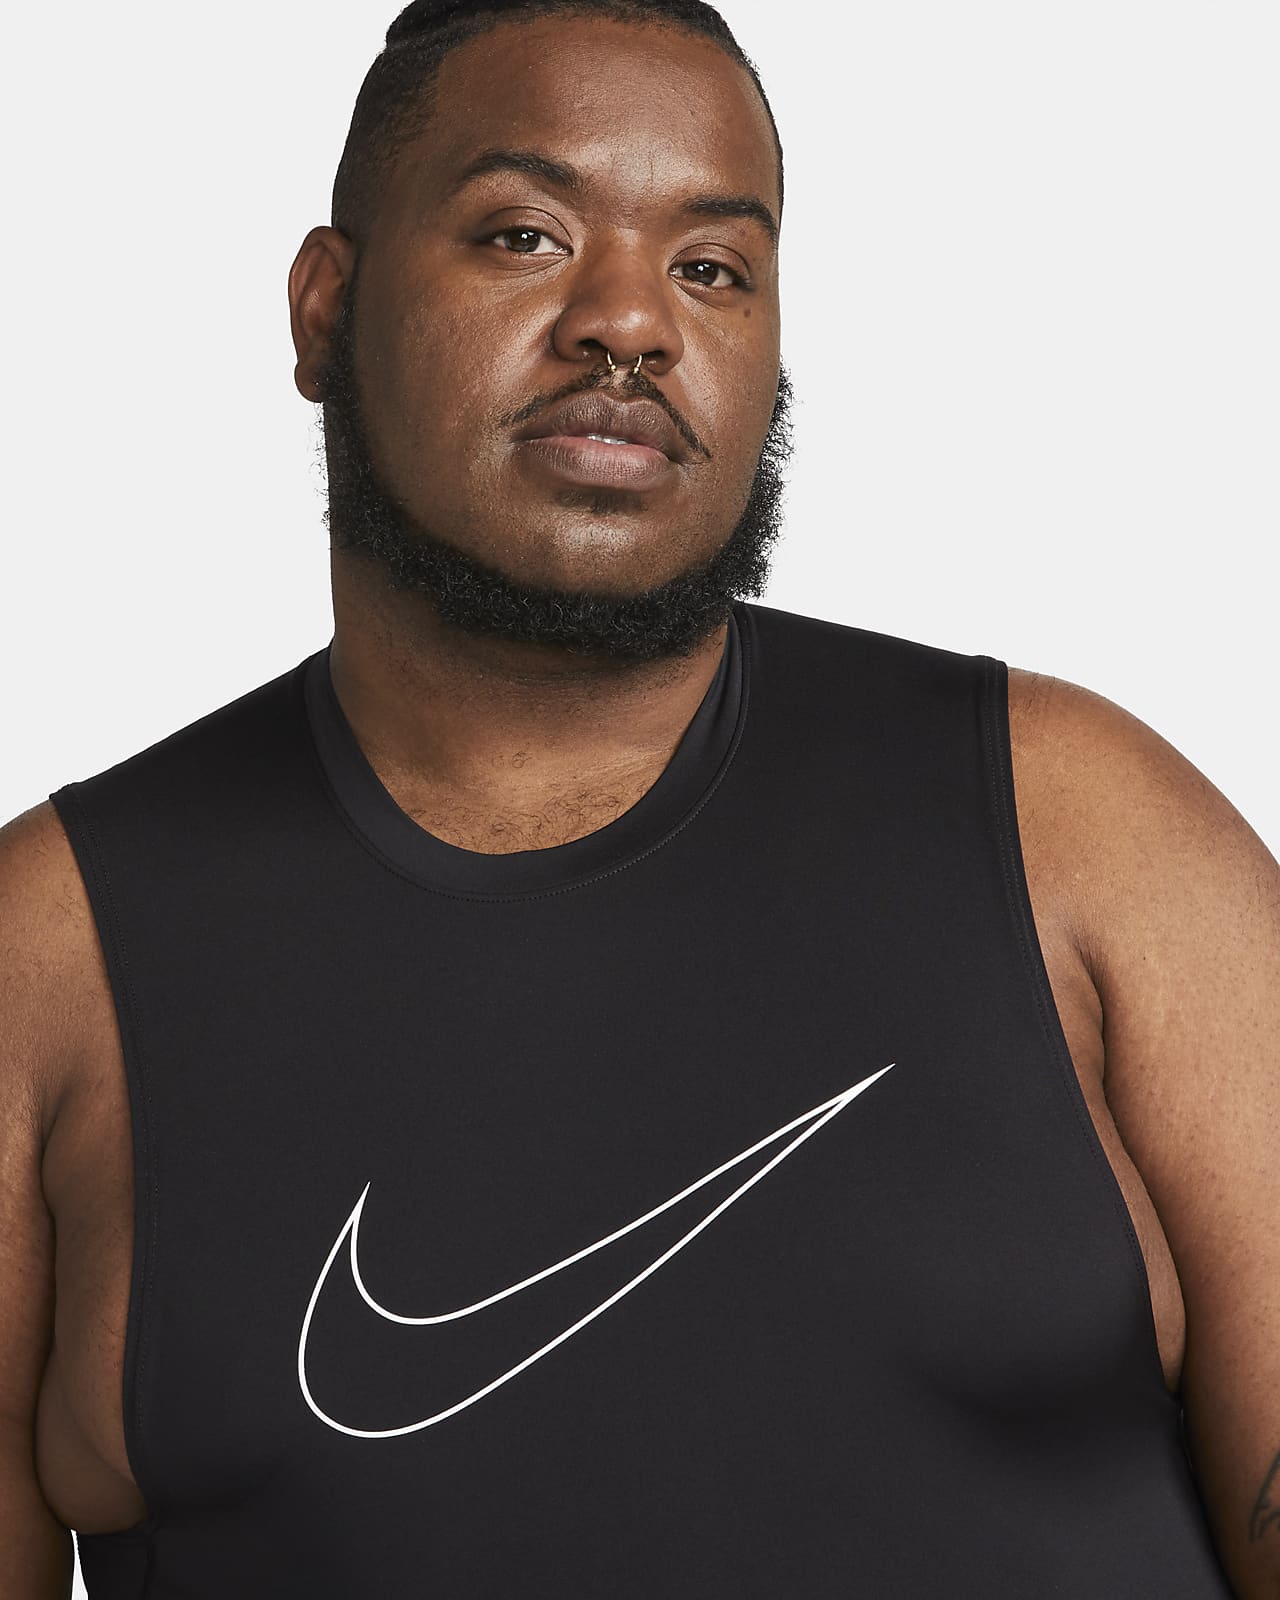 cajón sofá mero Camiseta sin mangas y corte ajustado para hombre Nike Pro Dri-FIT. Nike.com